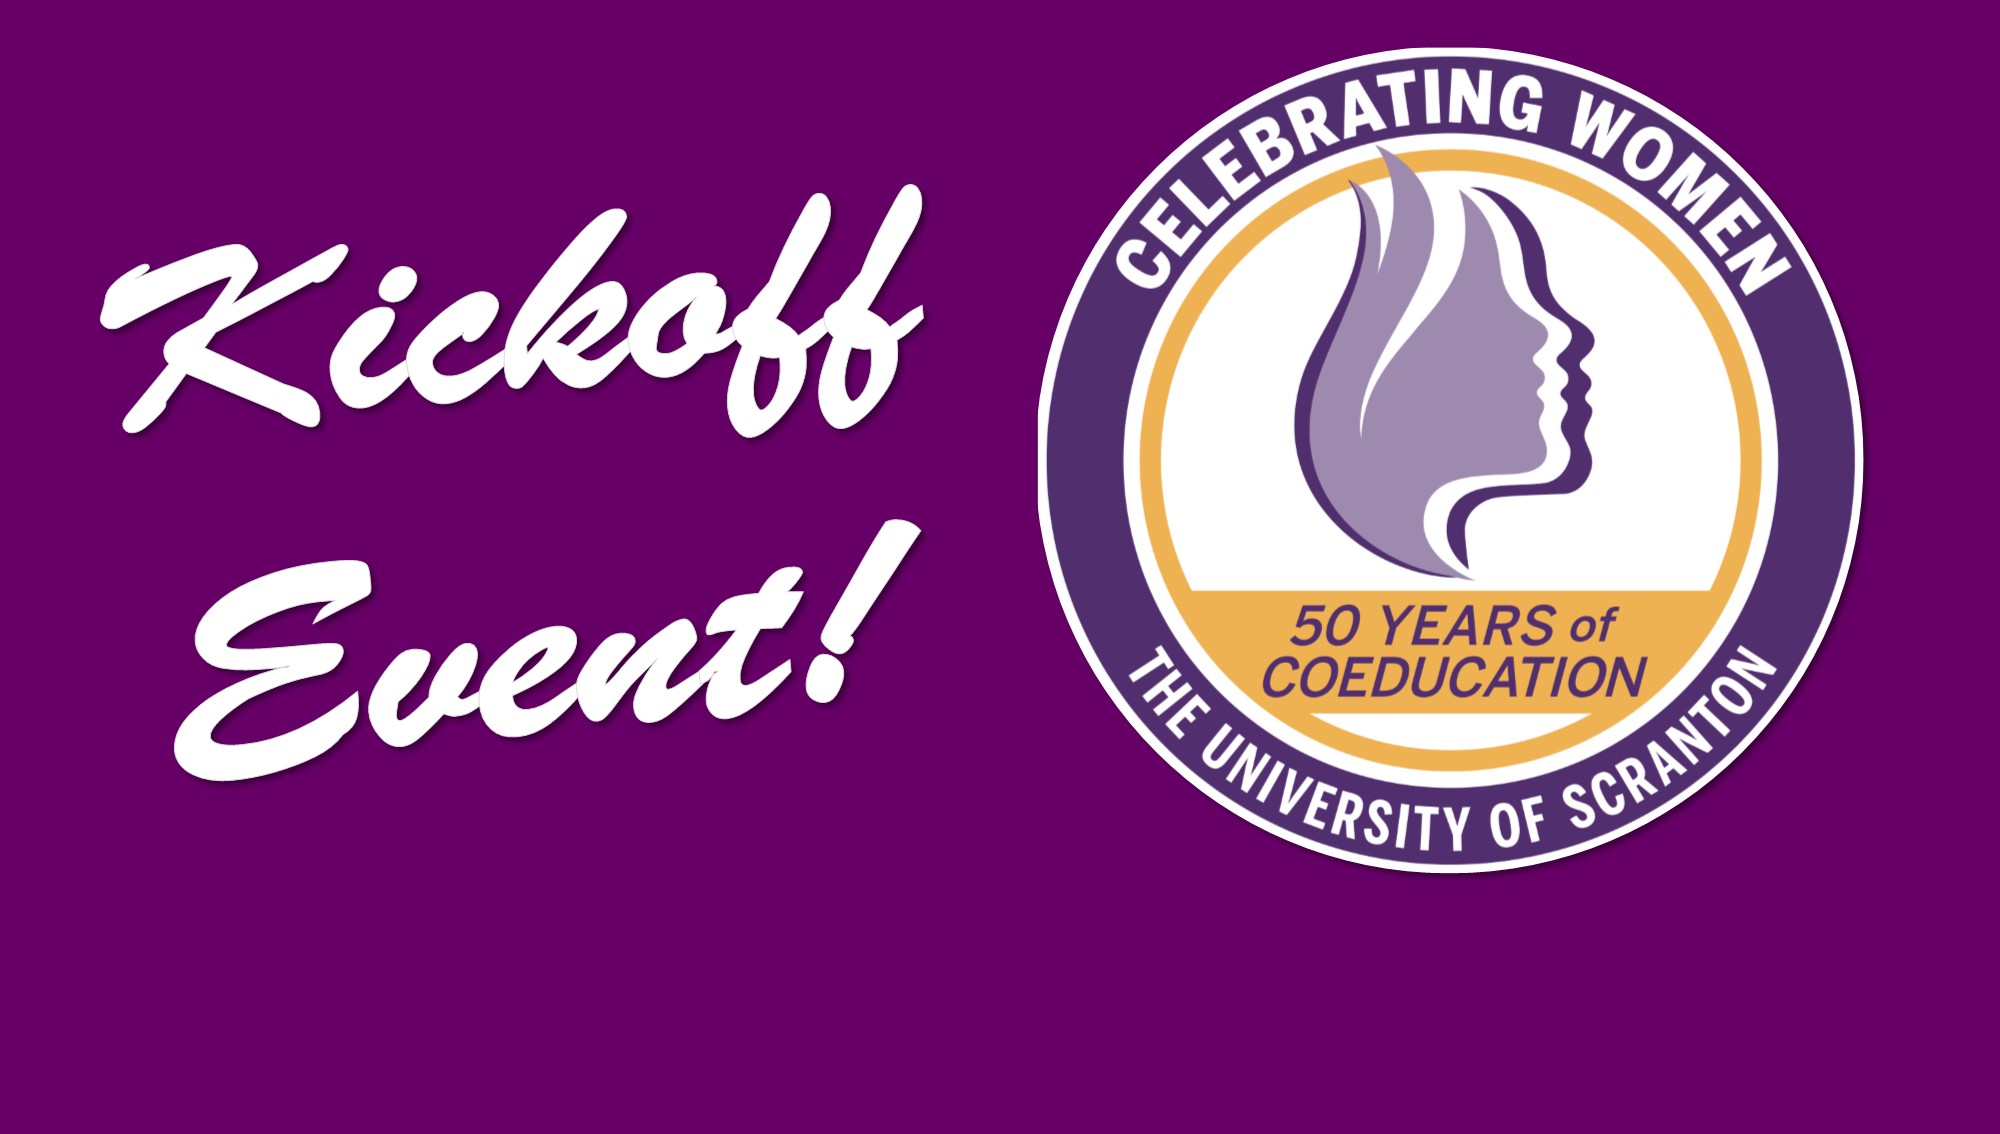 50th Anniversary Celebration of Coeducation Begins